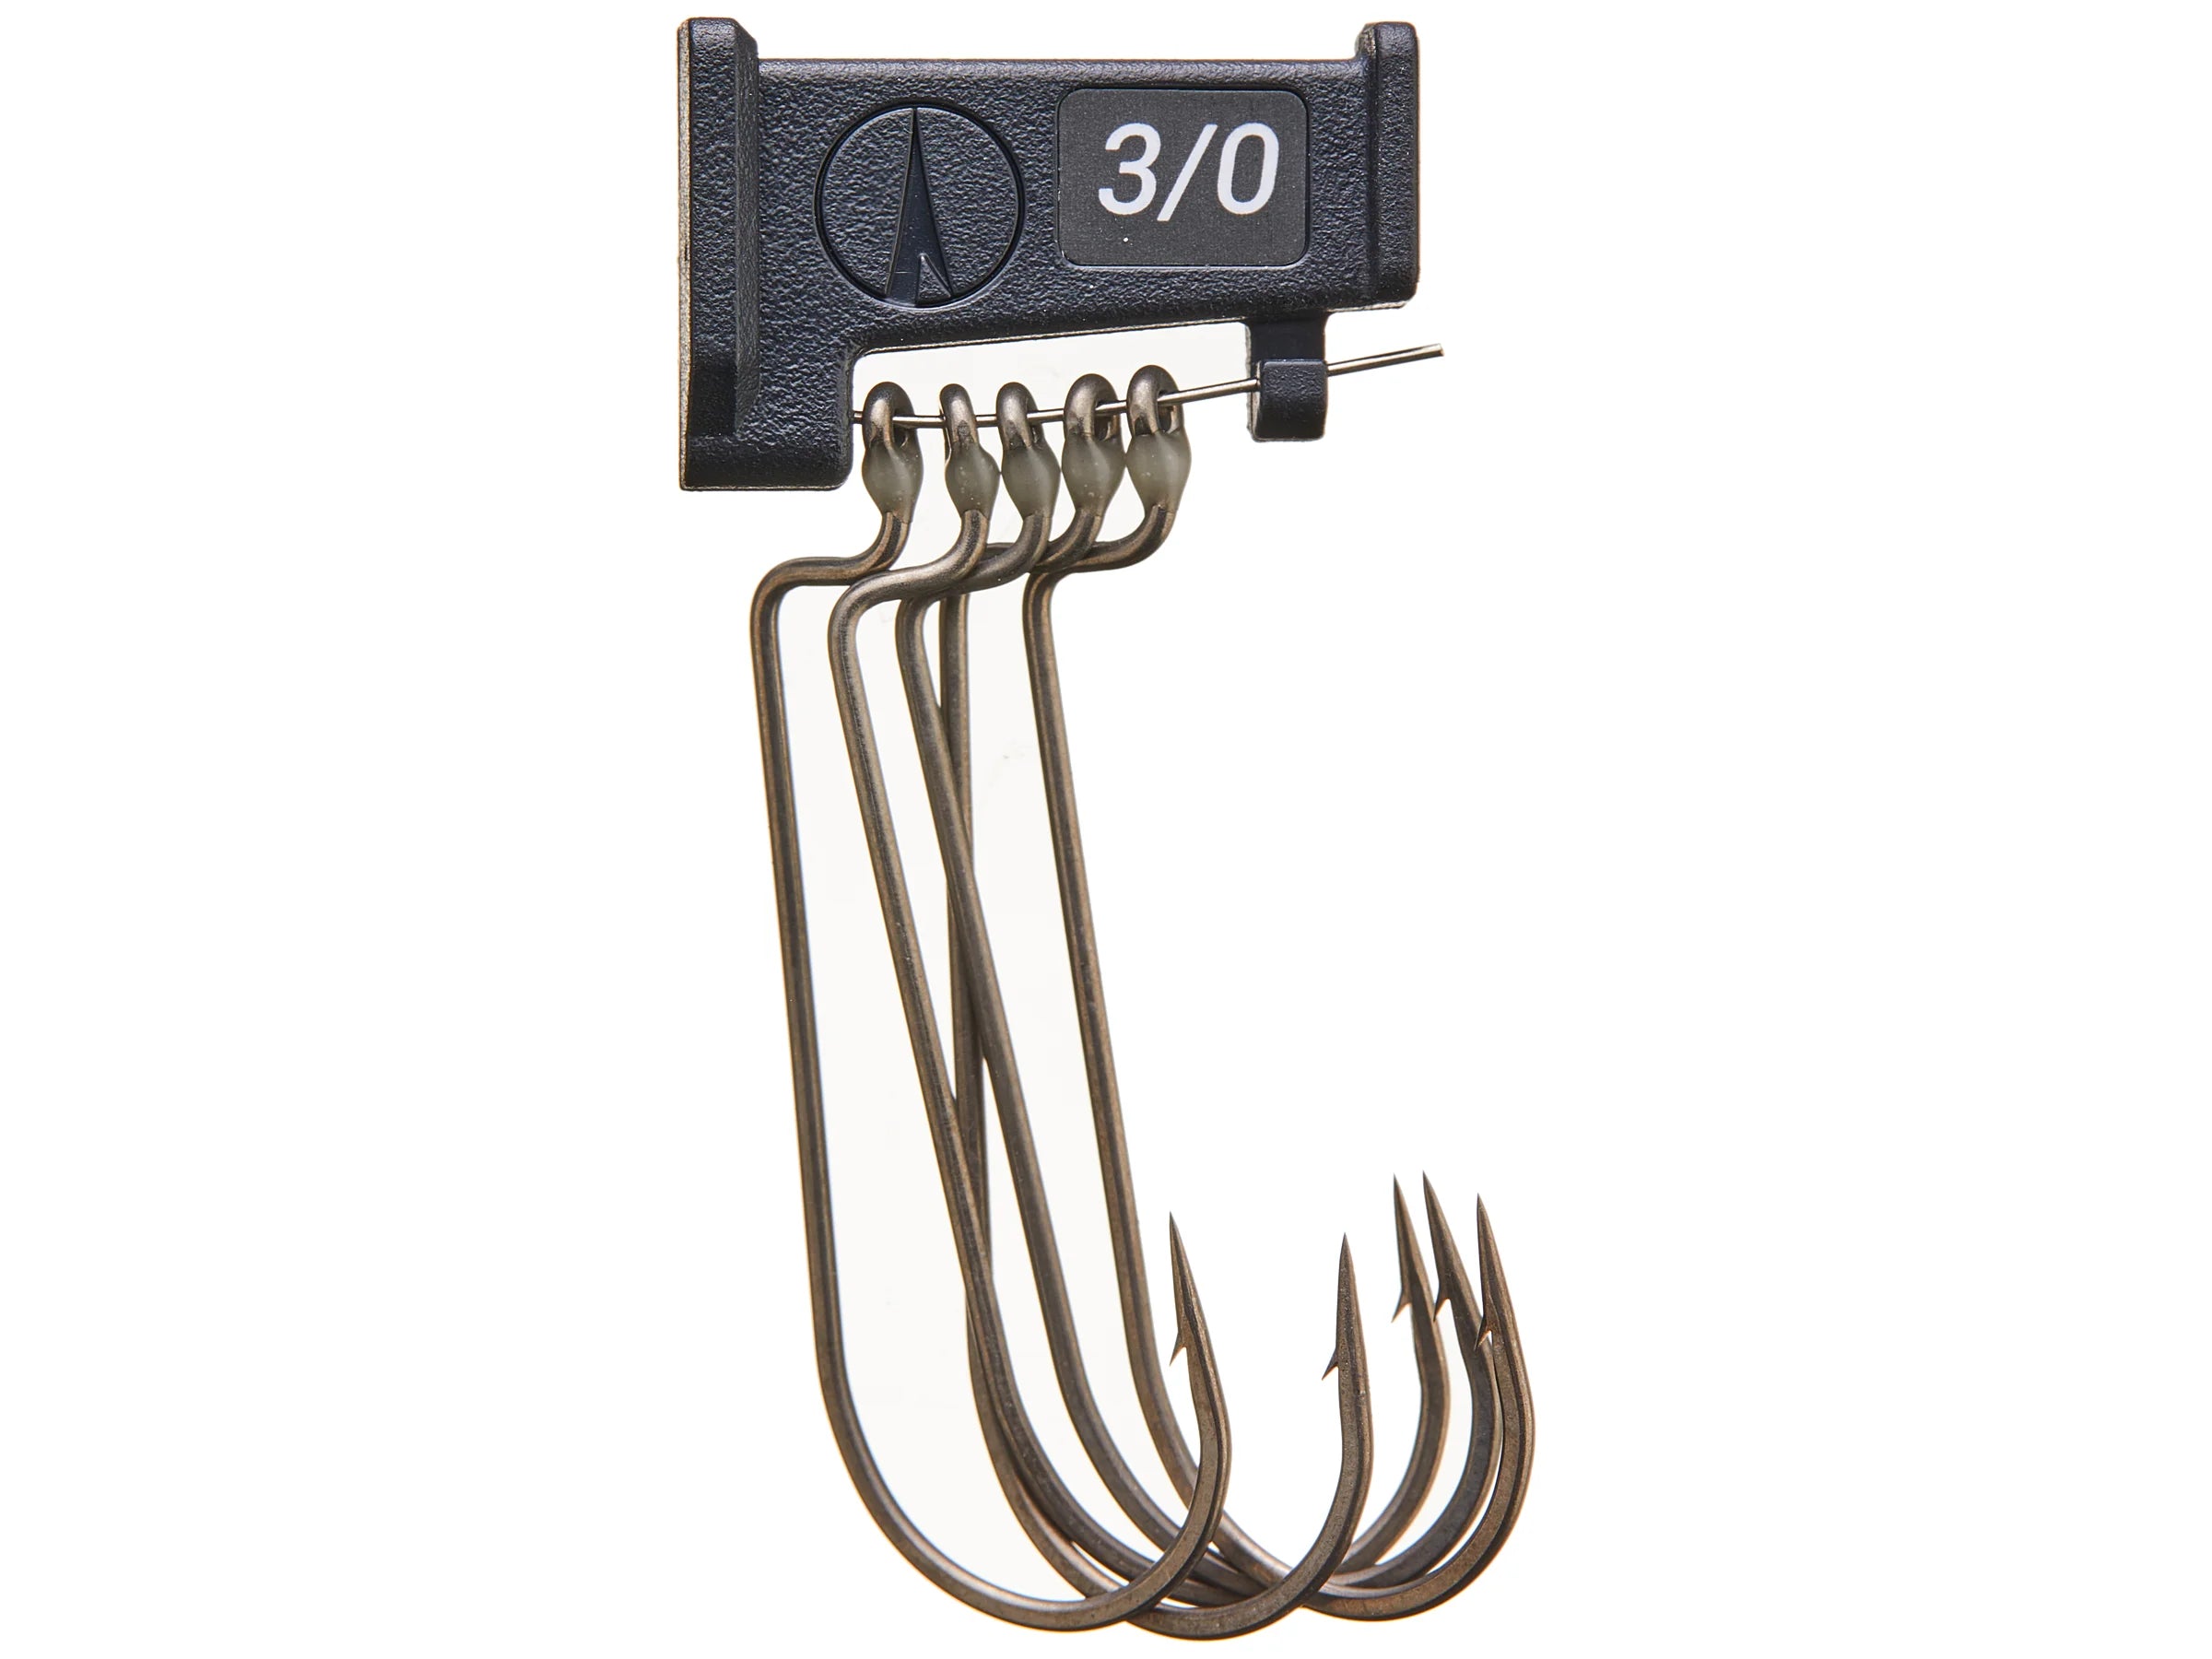 Tru Turn PX36Z-2-0 Pro X Hard Bend Offset Worm Hook, Size 2-0 - Pack of 5